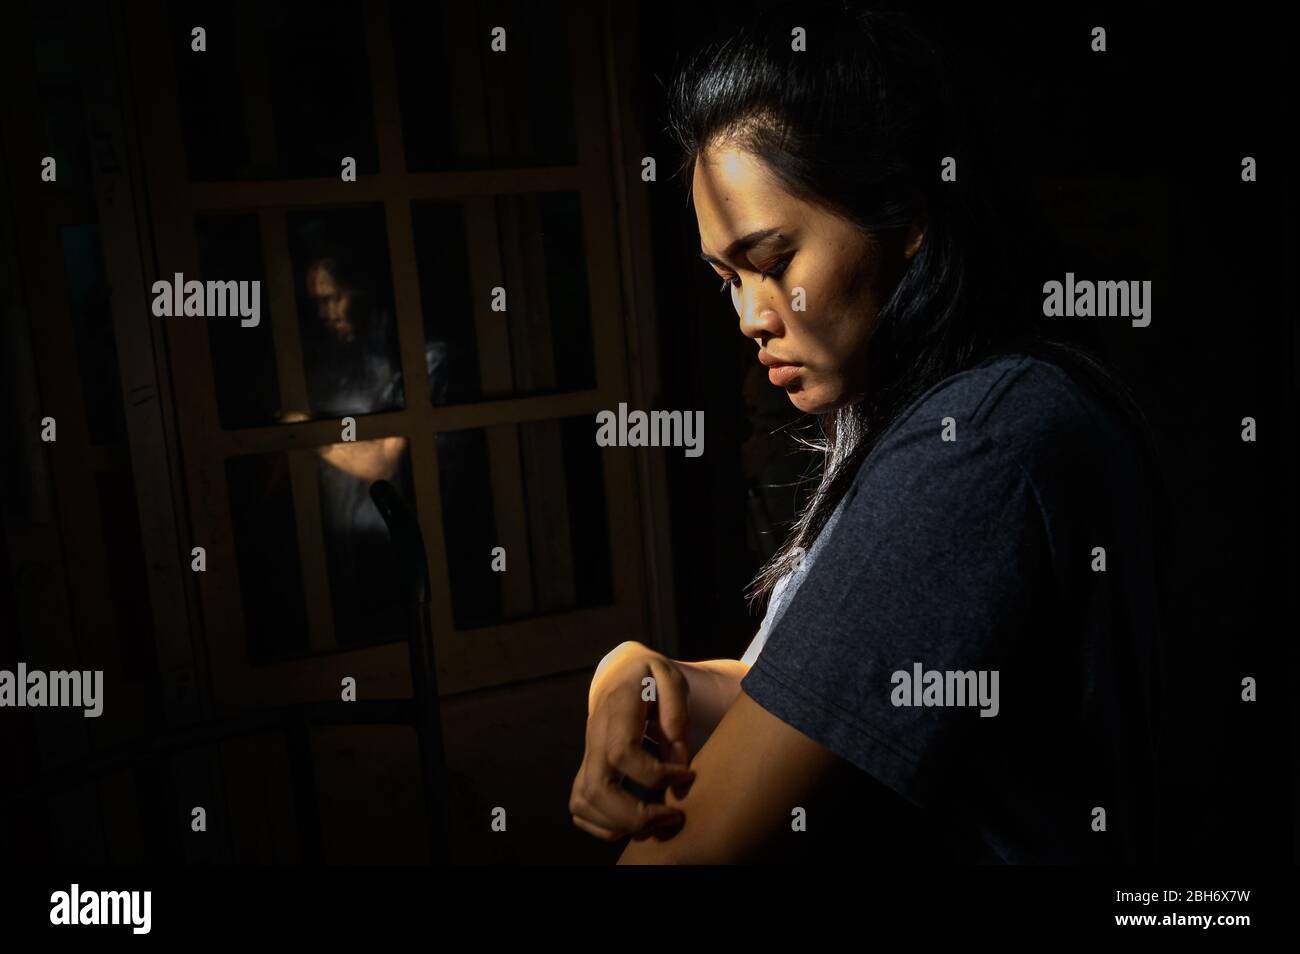 Thai woman and her reflection, Bangkok, Thailand Stock Photo